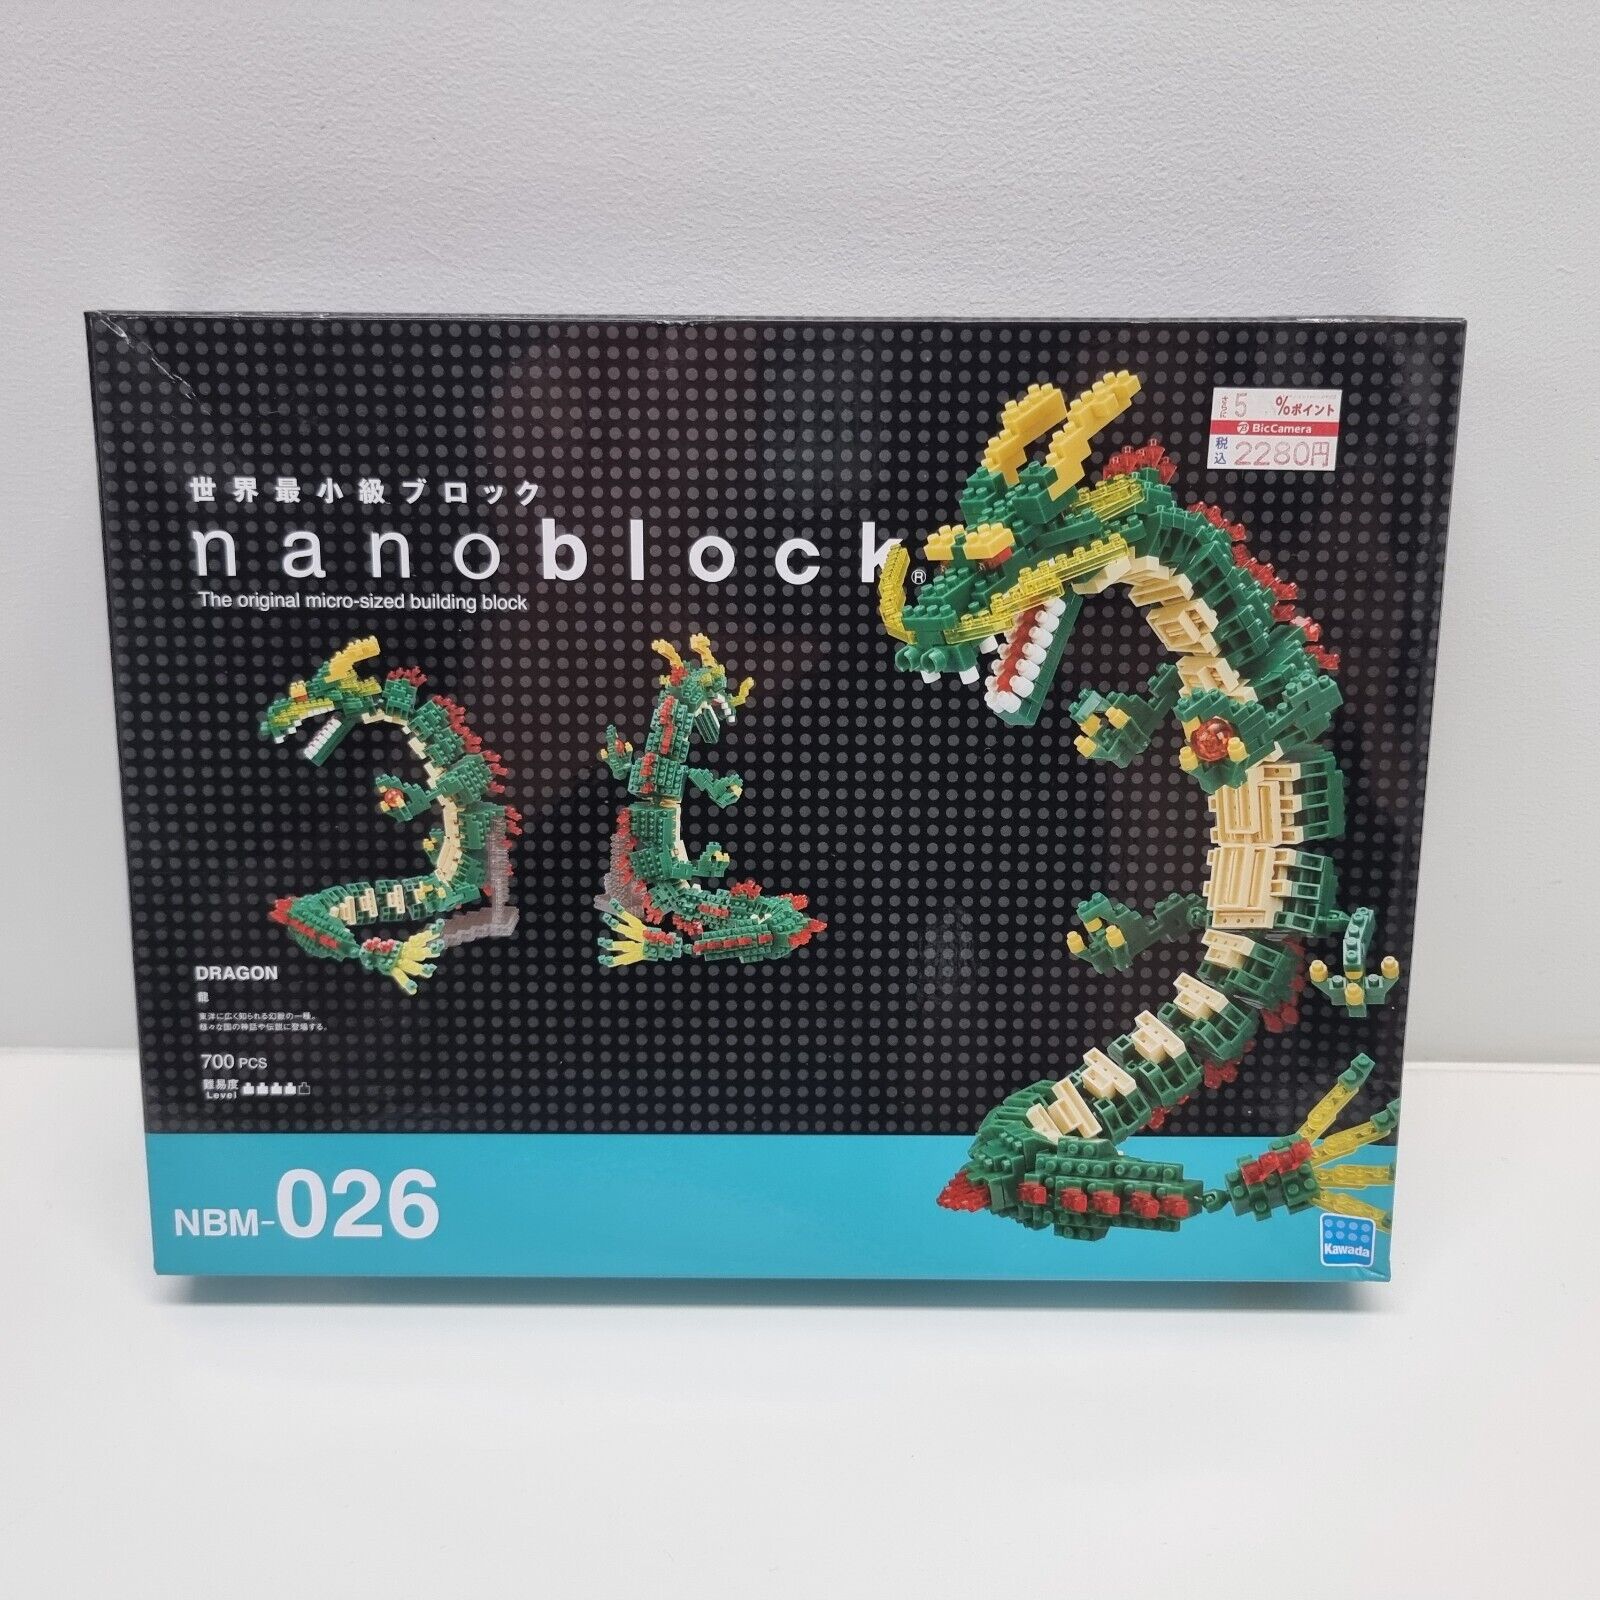 Nanoblock Dragon NBM-026 | Kawada Japan | 700 Pieces | Brand New Sealed Unopened